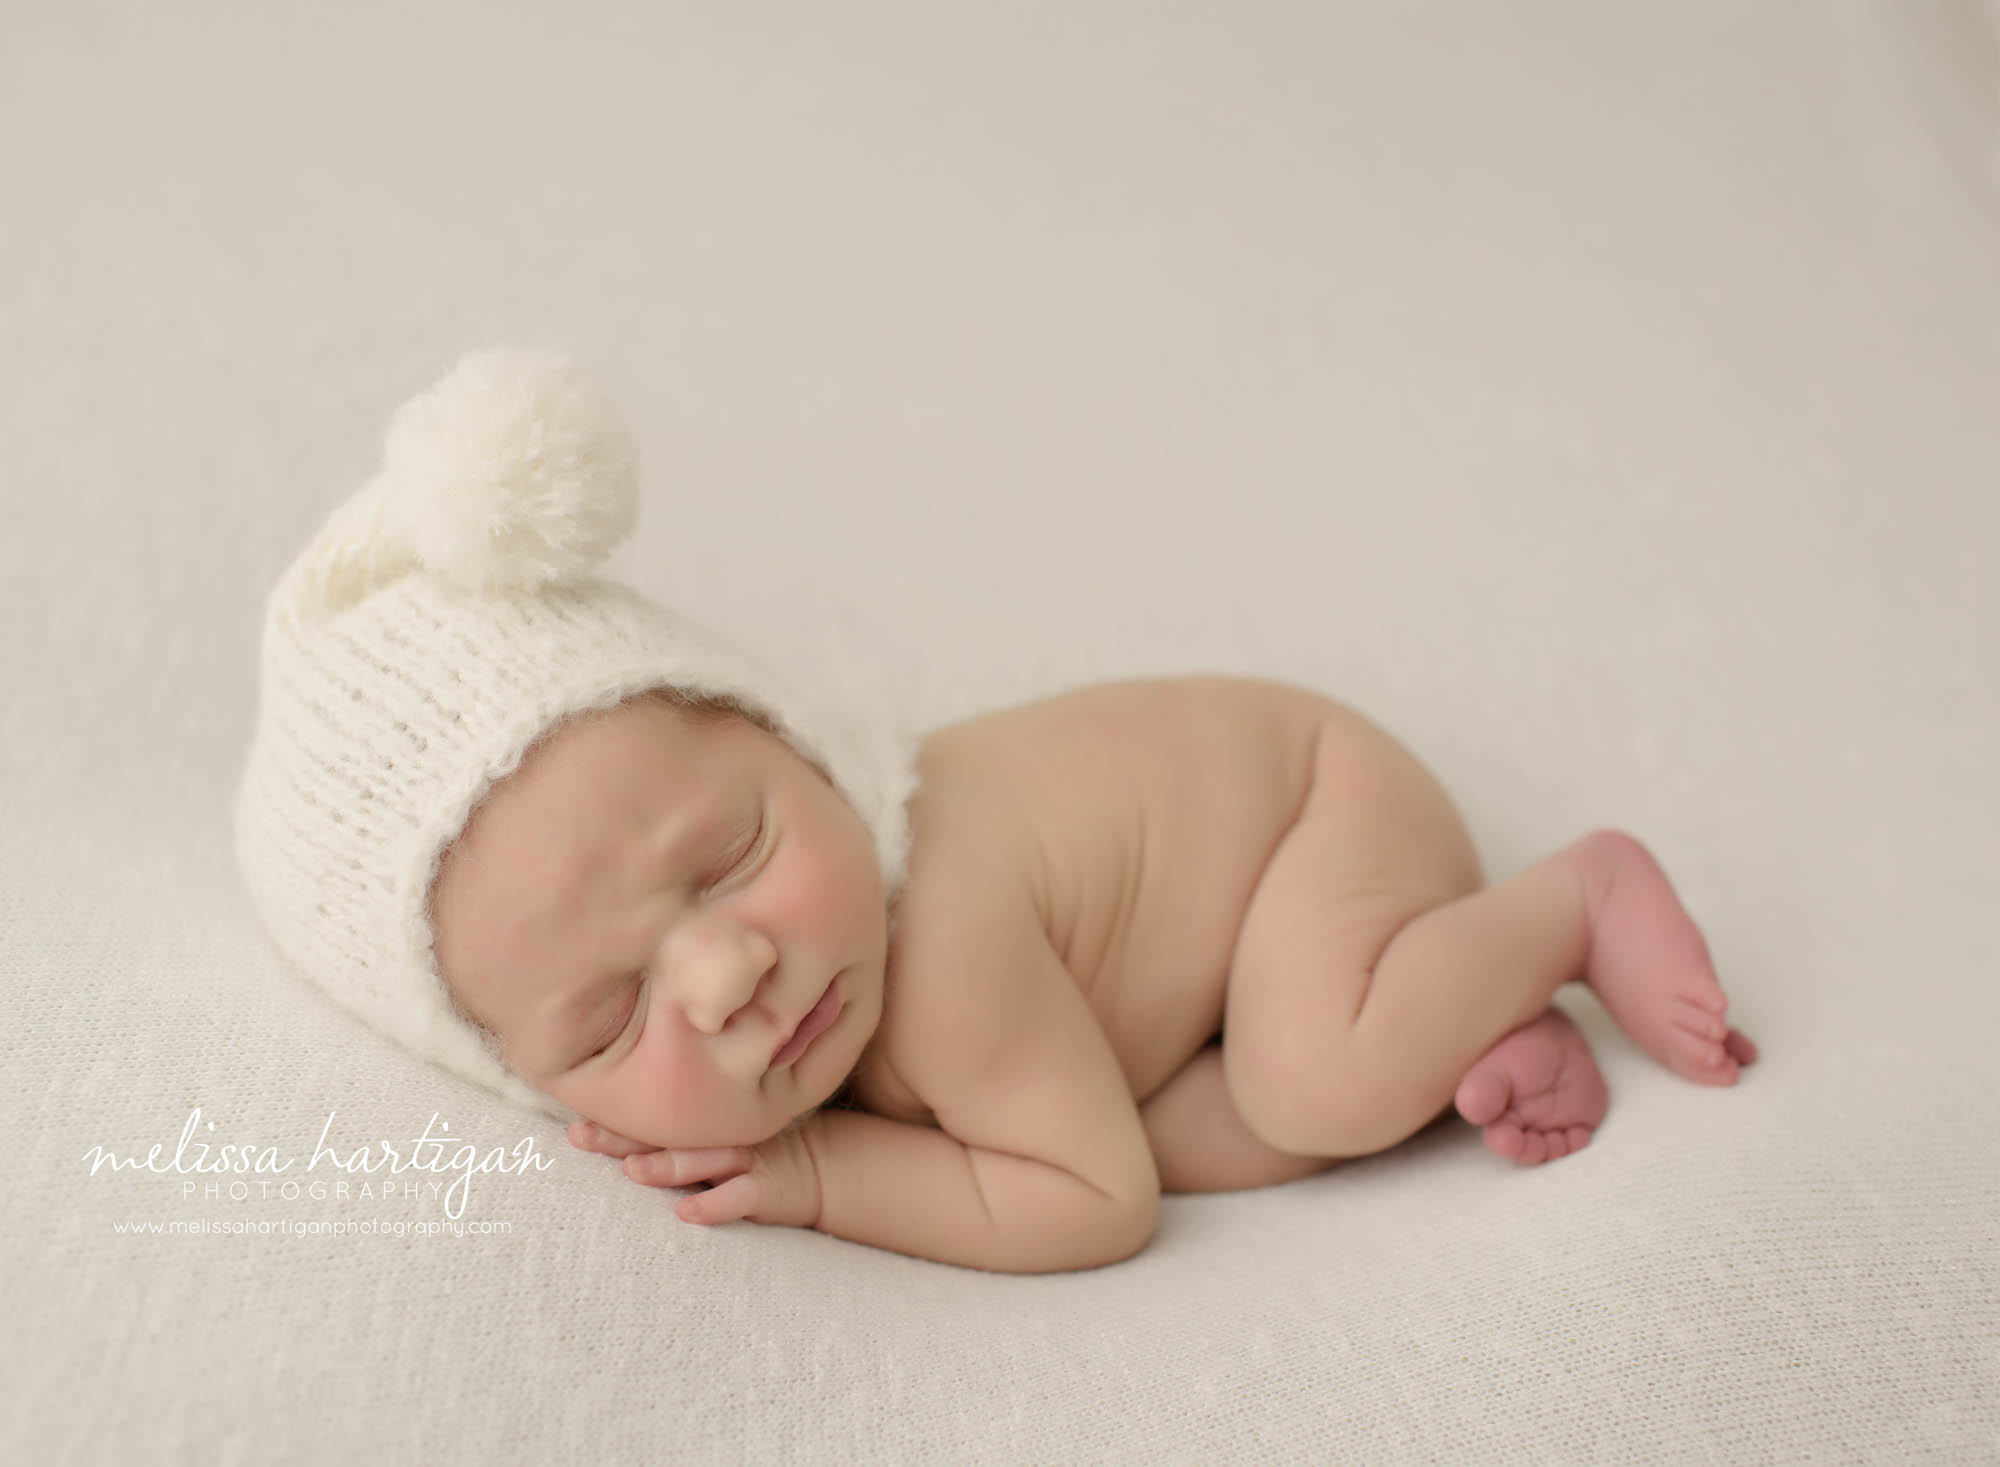 newborn baby sleeping on side with cream colored pom pom sleepy hat